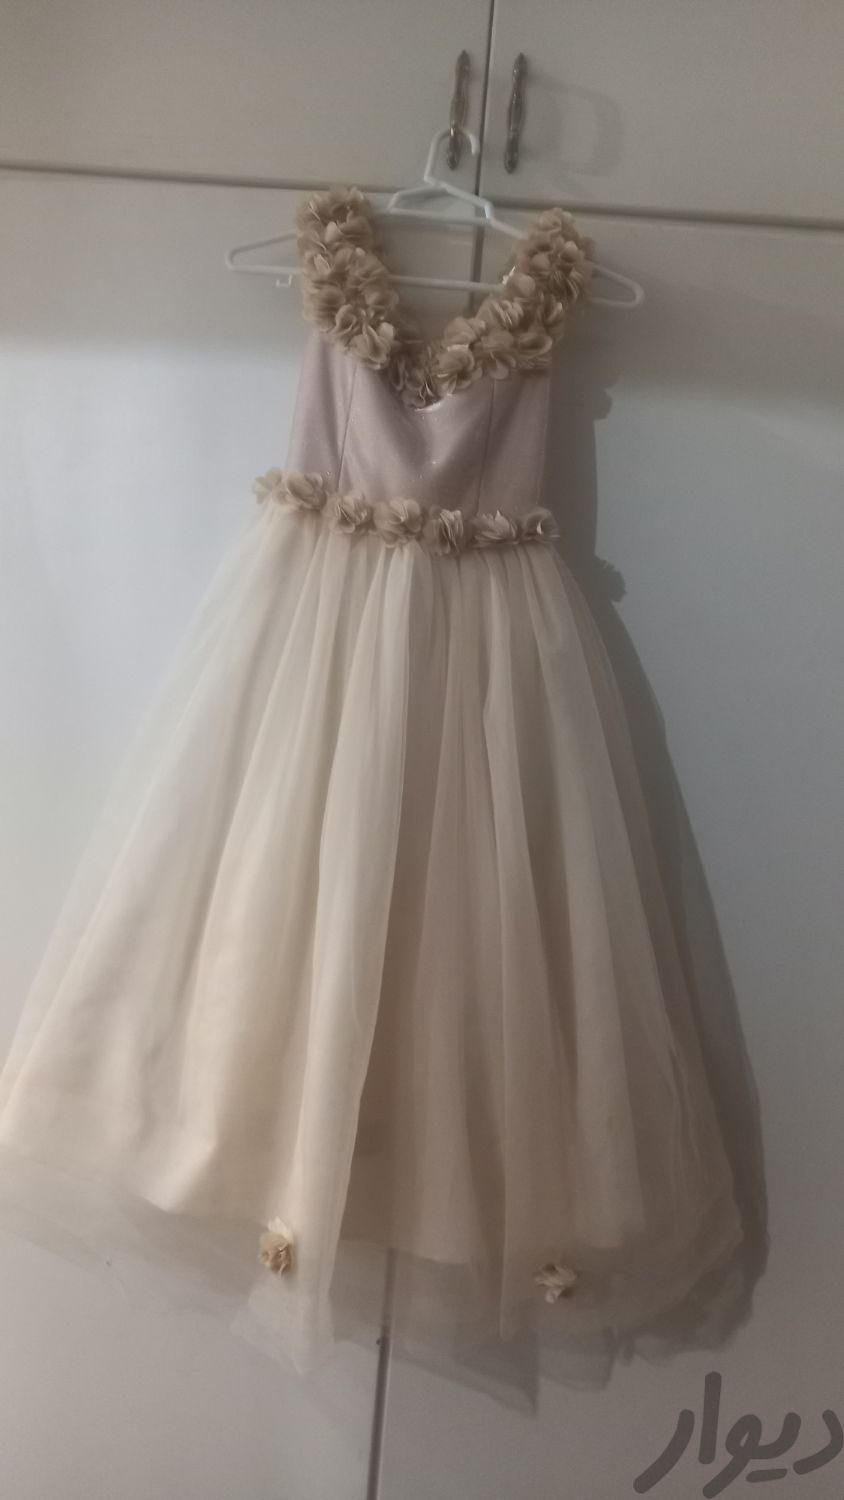 لباس عروس دخترونه براسن ۸سال|لباس|آبیک, |دیوار